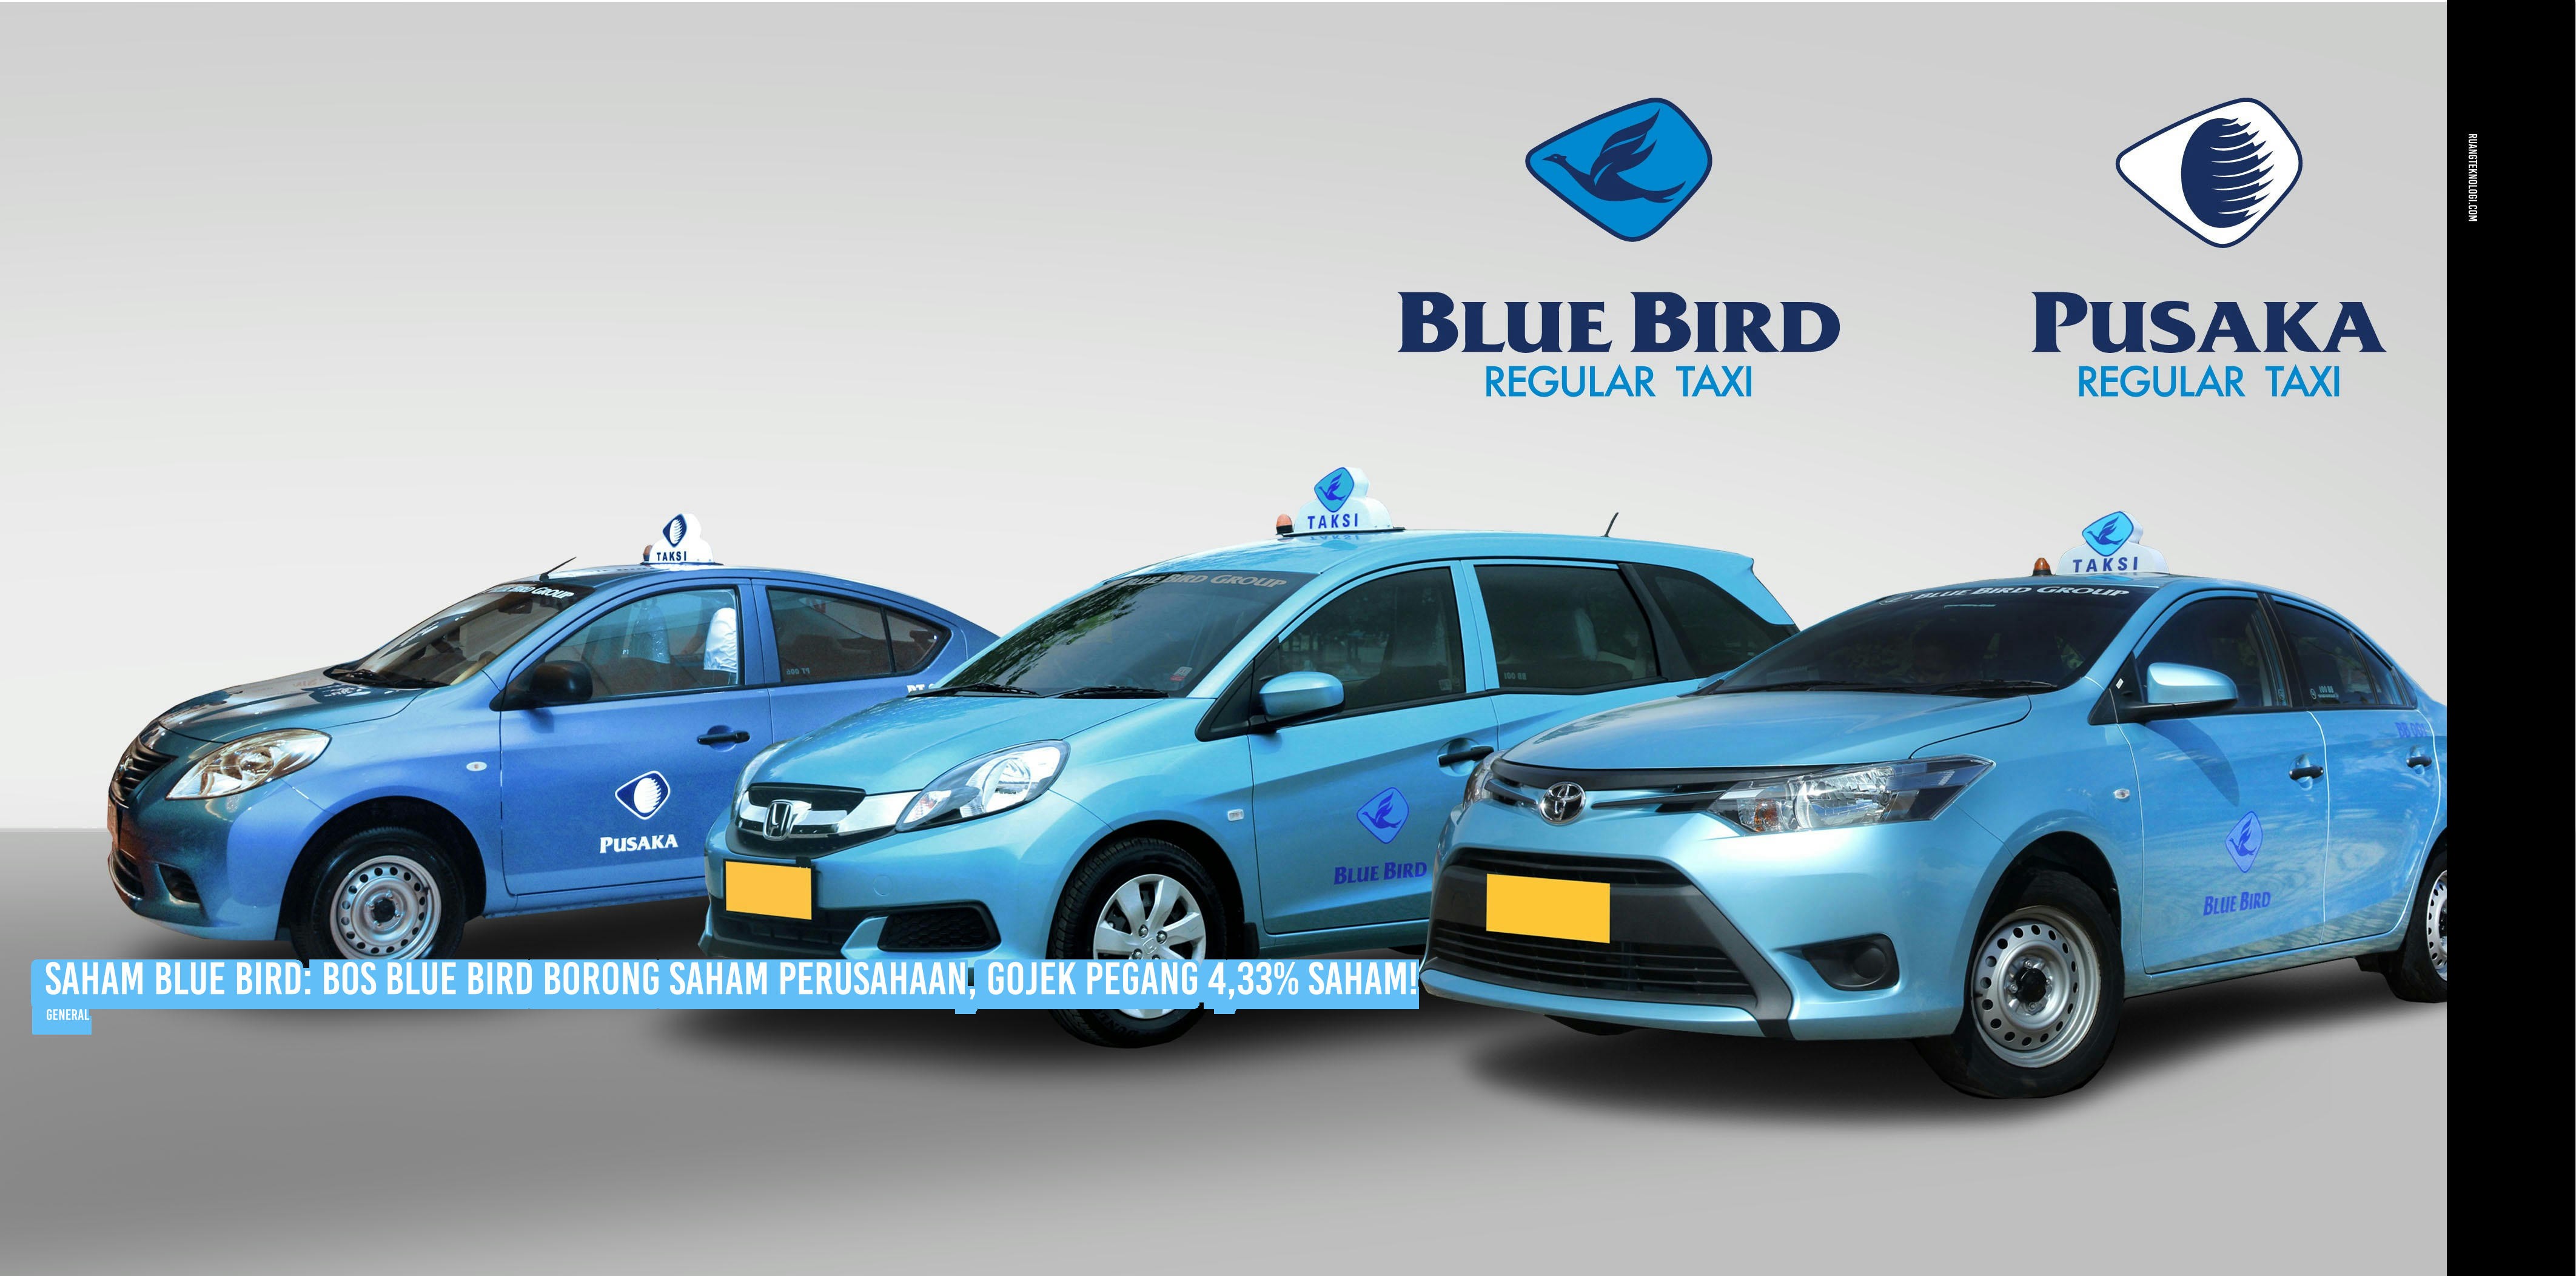 Blue Bird taxi company